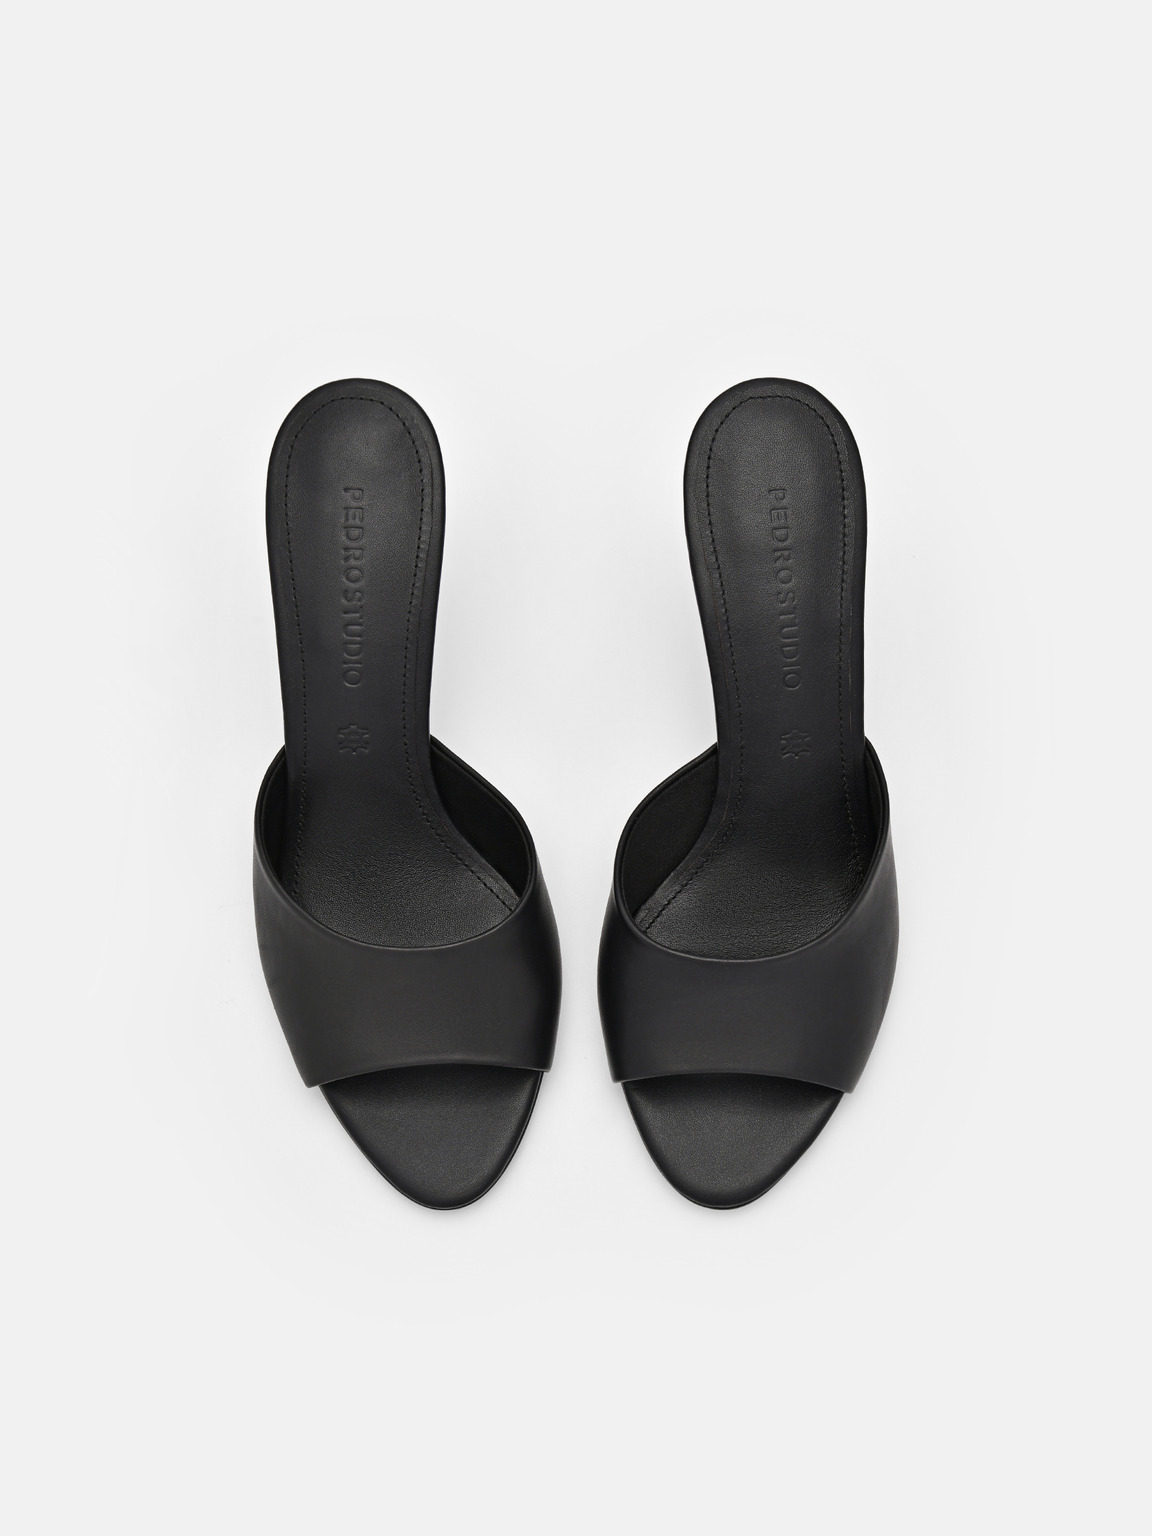 PEDRO Studio Ashley Leather Heel Sandals, Black